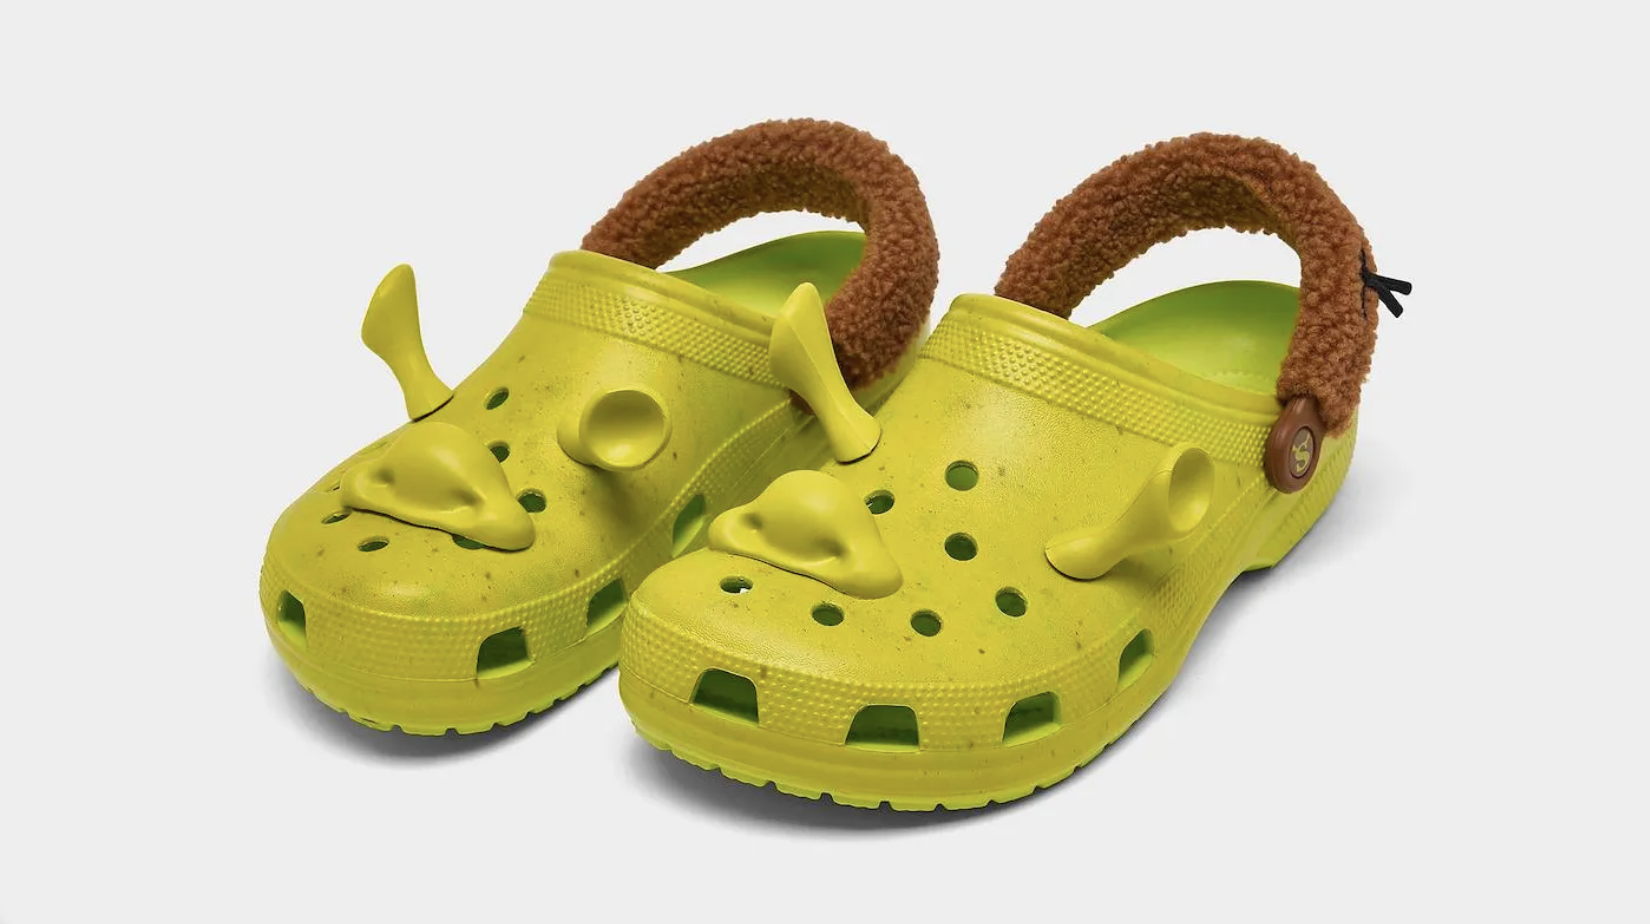 Shrek crocs